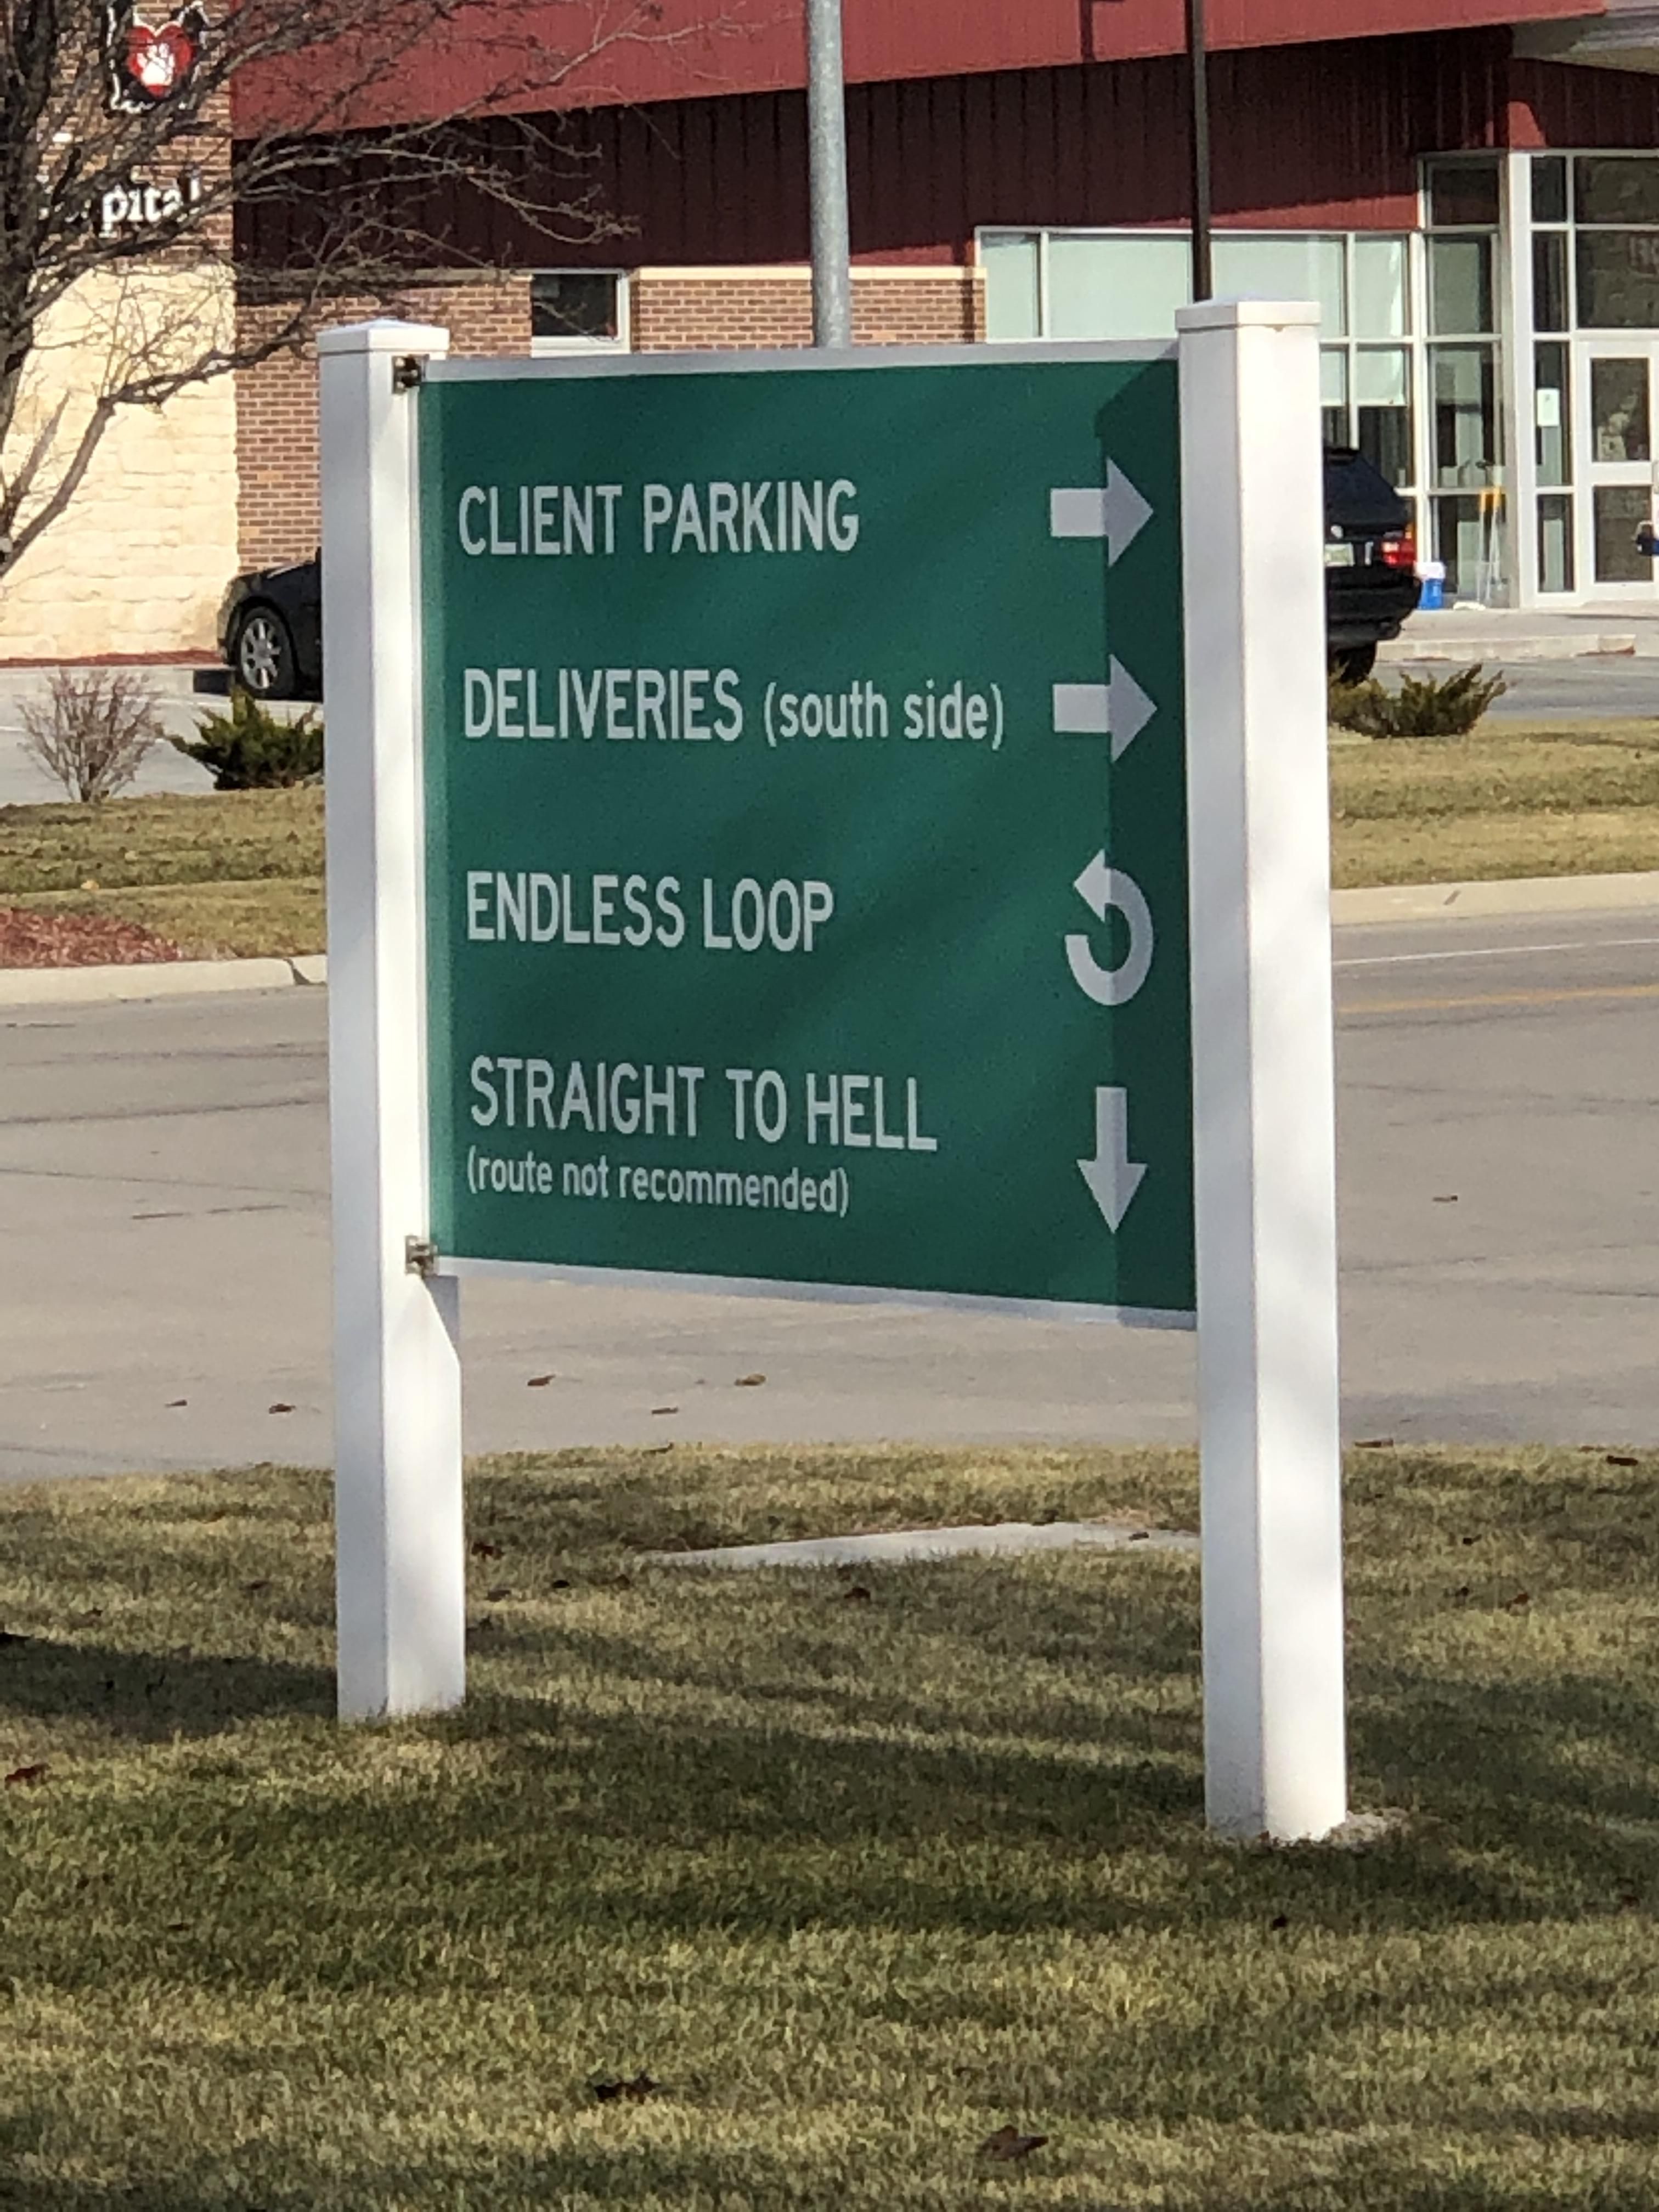 A very informative sign I came across today in Nebraska